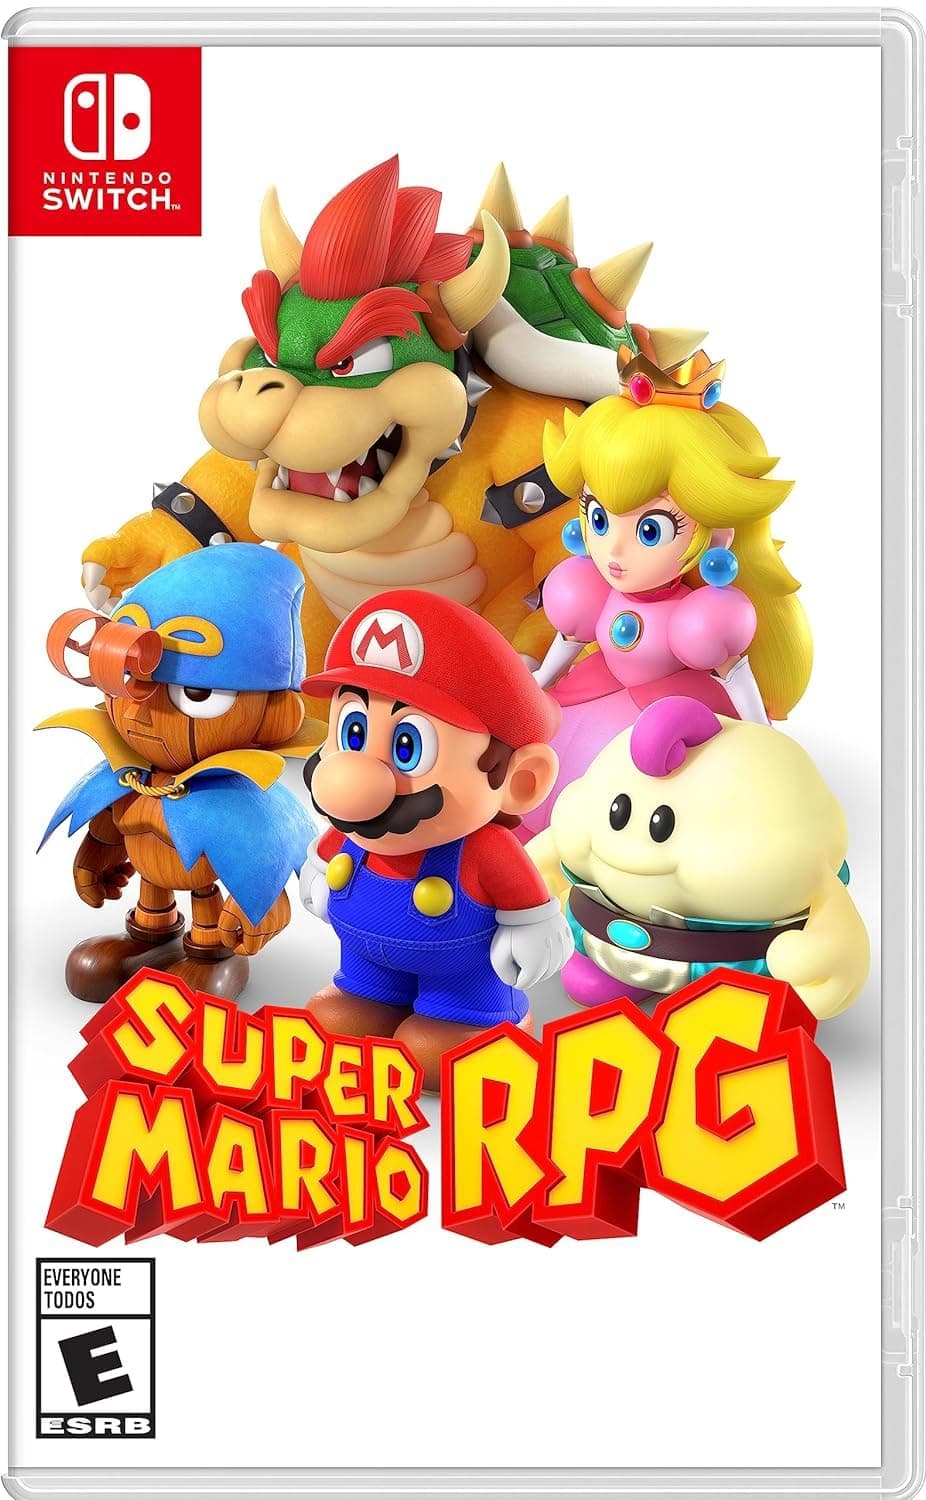 Super Mario RPG for Nintendo Switch.